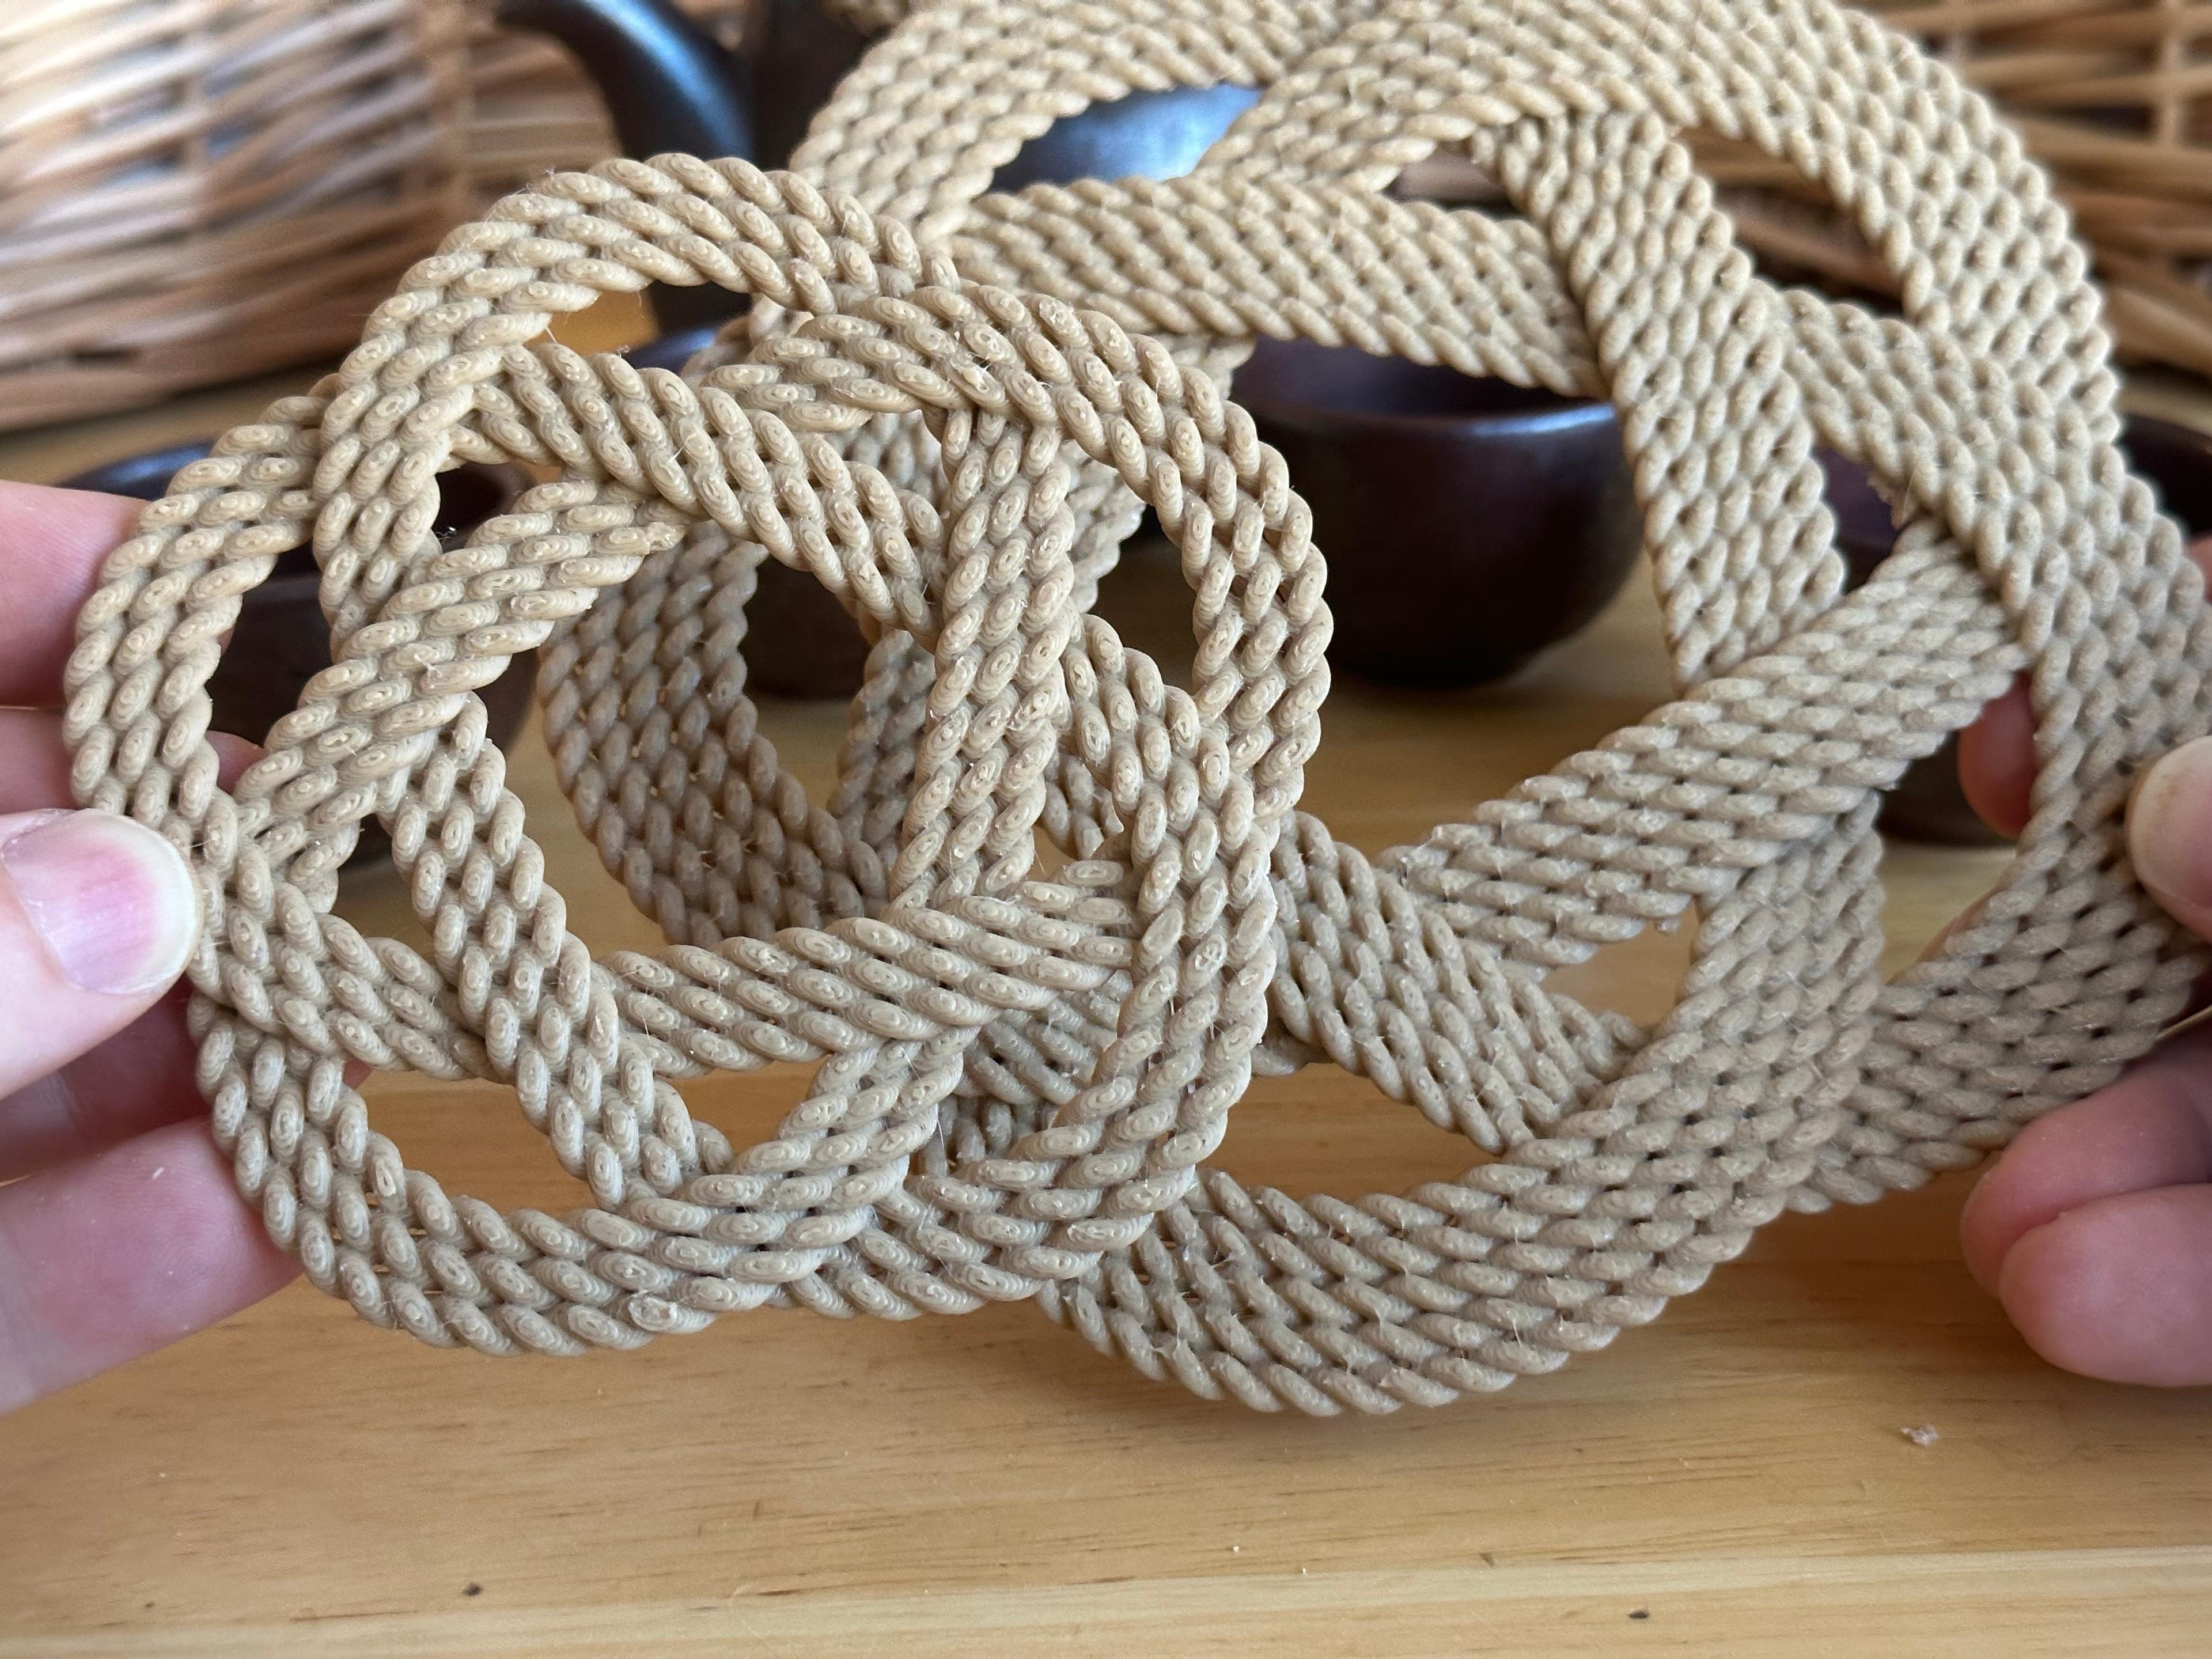 Sailor’s Knot Wreath (3 cord) 3d model